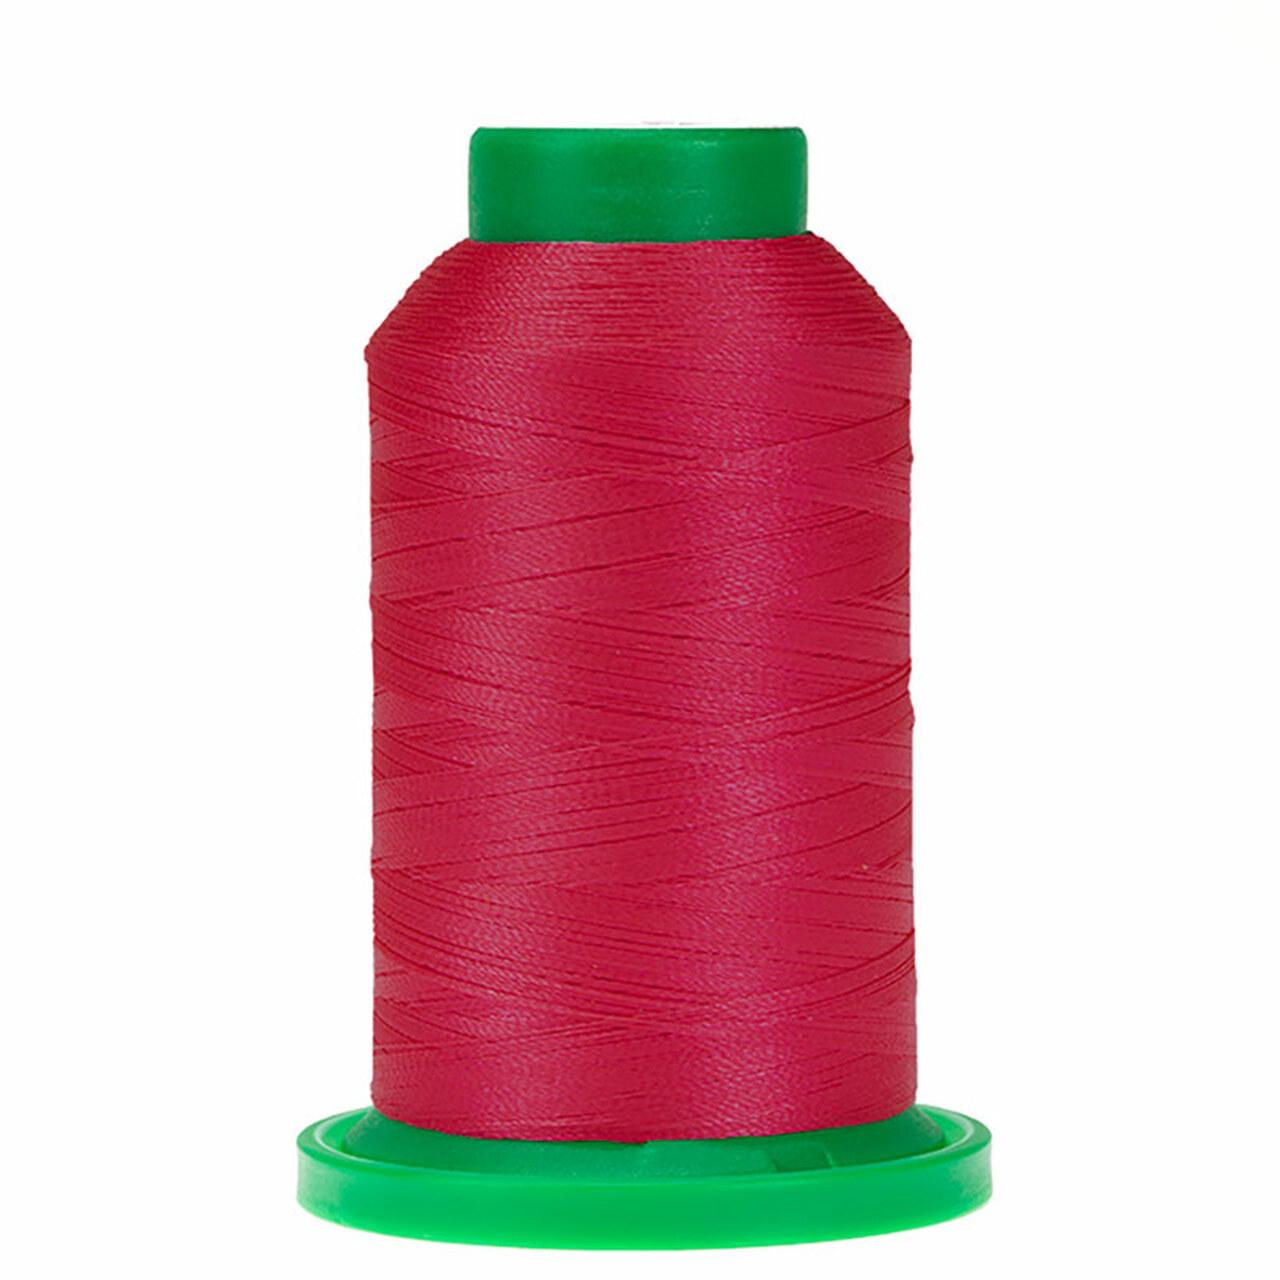 Thread - Isacord - Bright Ruby - 2922-2300